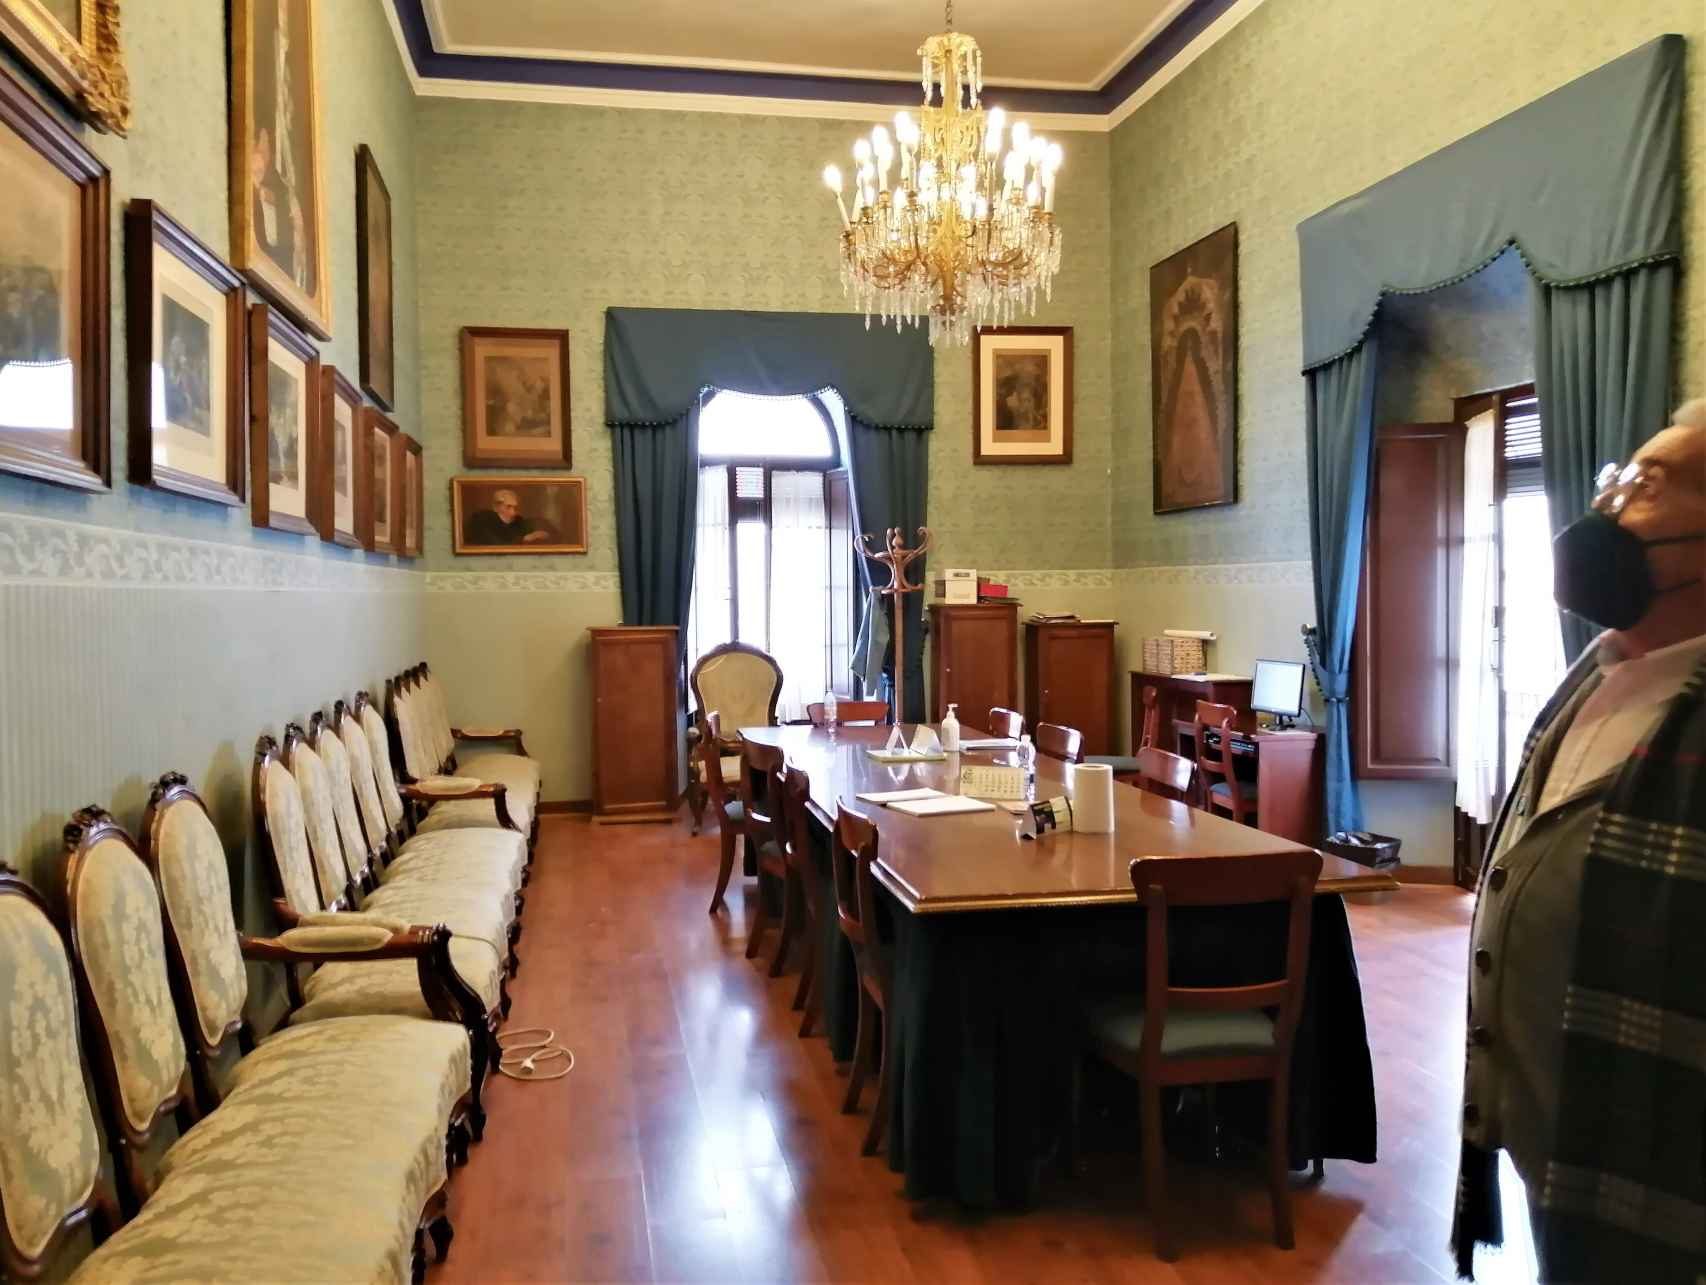 La sala de profesores del histórico instituto de secundaria Aguilar y Eslava, en Cabra, donde estudiaron políticos como Niceto Alcalá Zamora o Carmen Calvo.